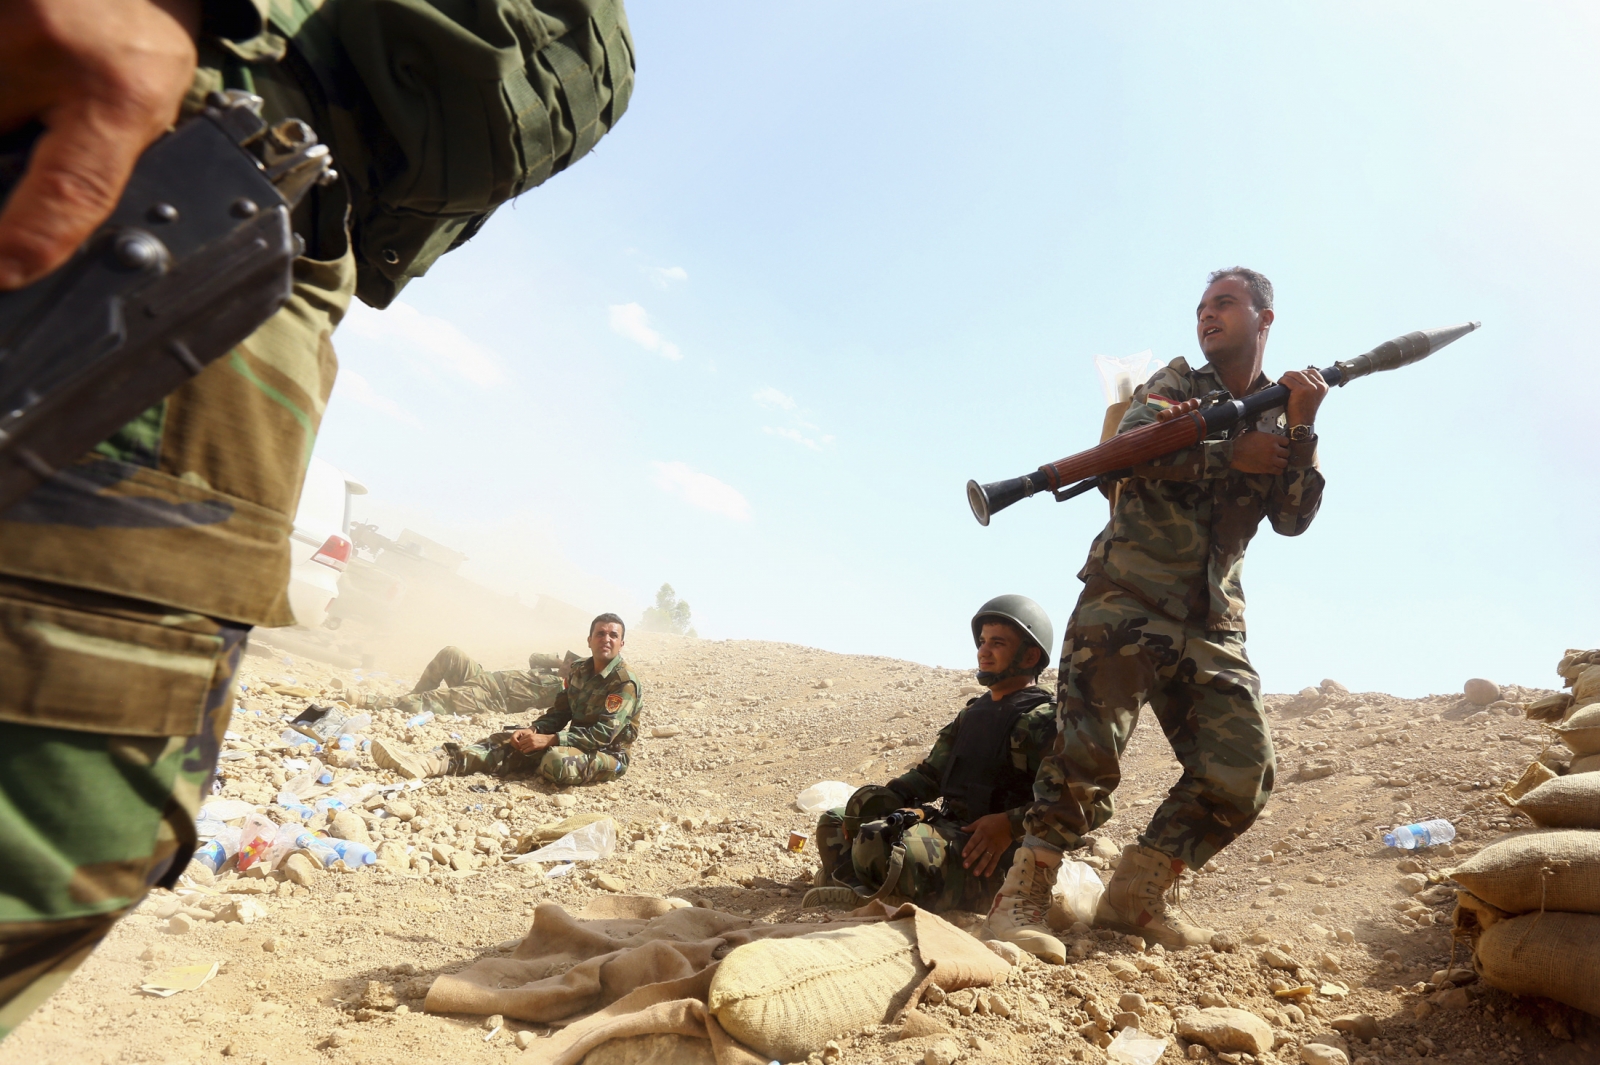 kurdish-peshmerga-troops-take-part-intensive-security-deployment-against-islamic-state.jpg